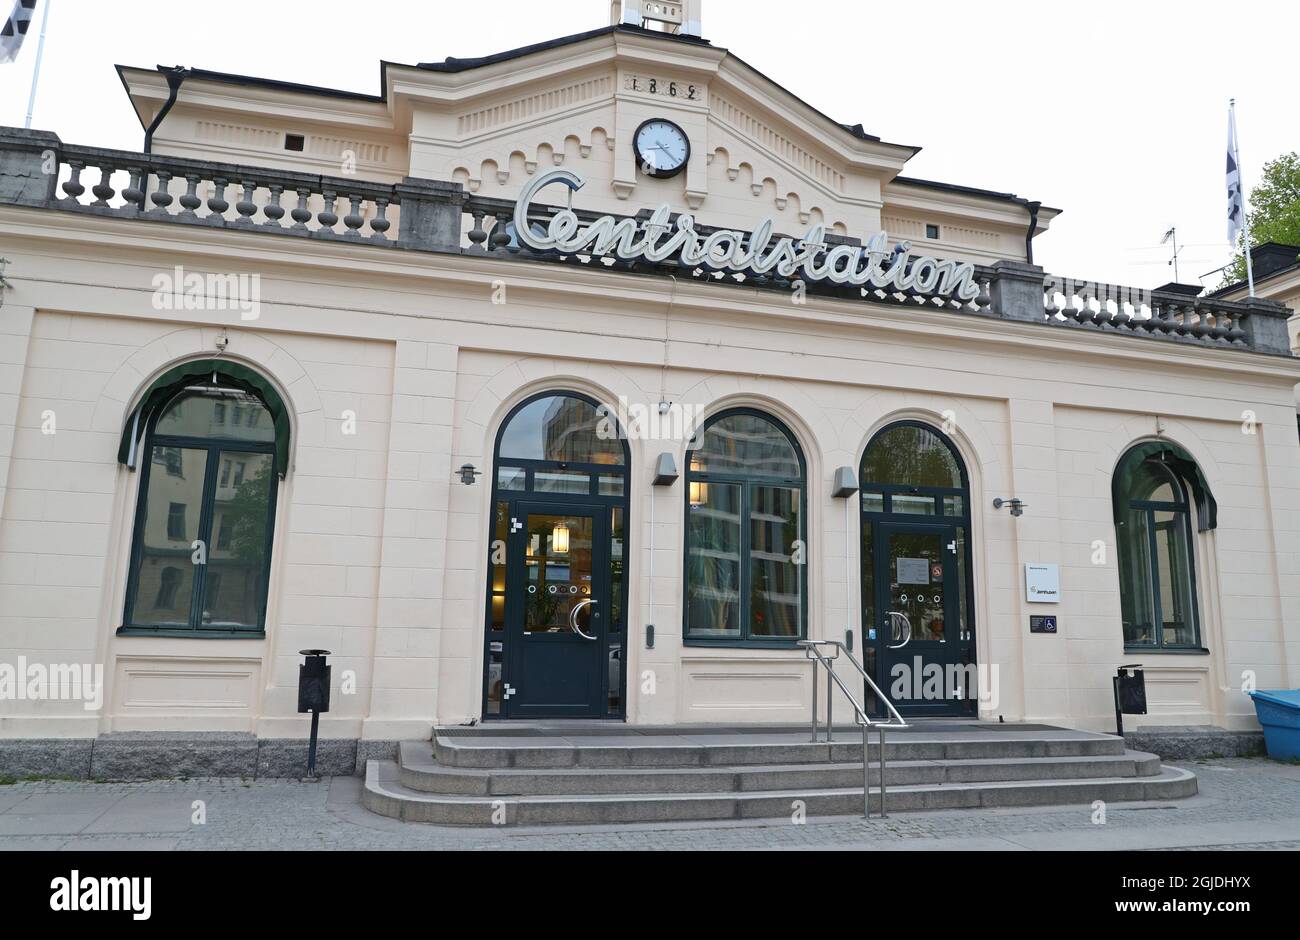 Centralstationen, the central railway station, in Orebro city, Sweden. Photo Jeppe Gustafsson / TT / code 71935  Stock Photo